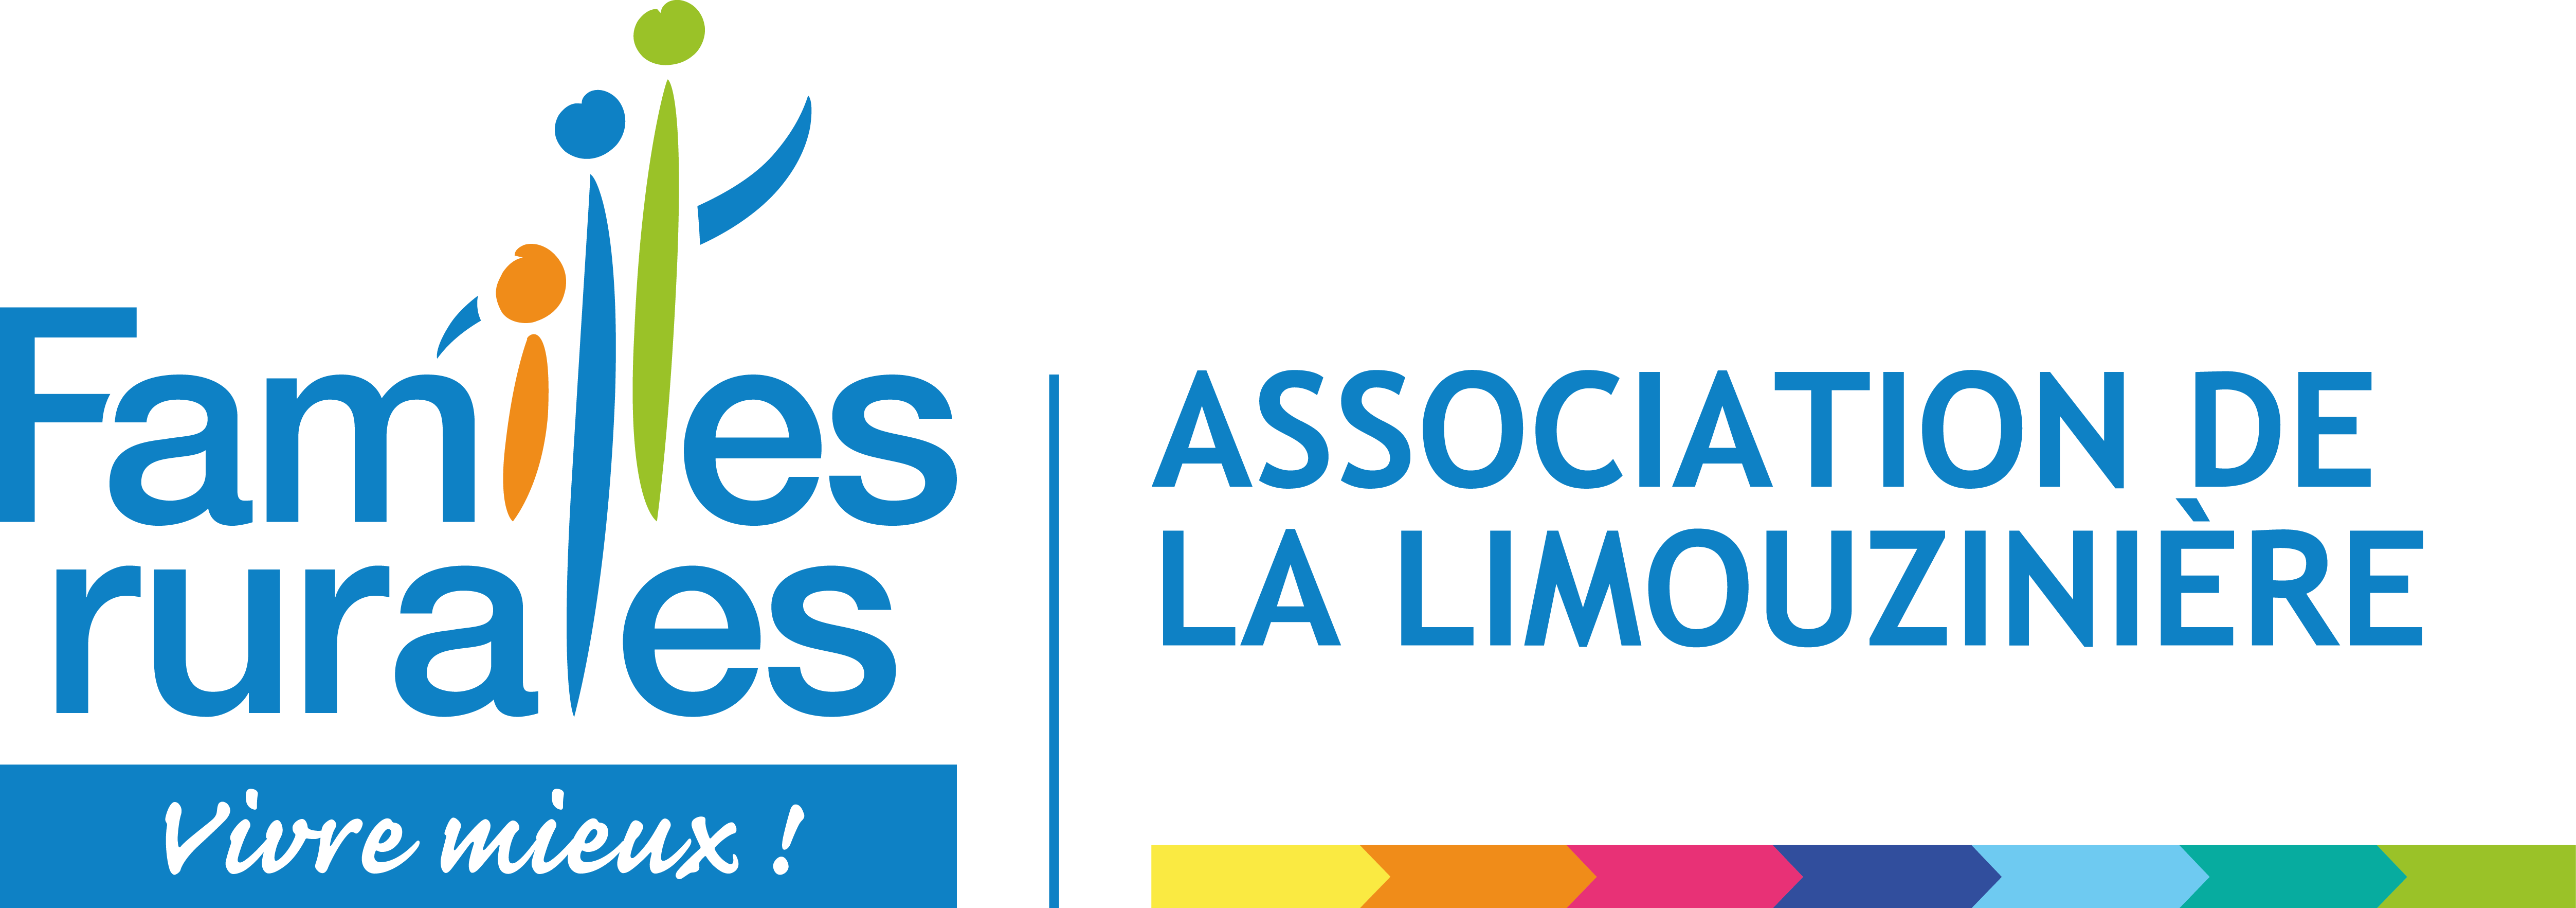 logo_LA_LIMOUZINIERE.png